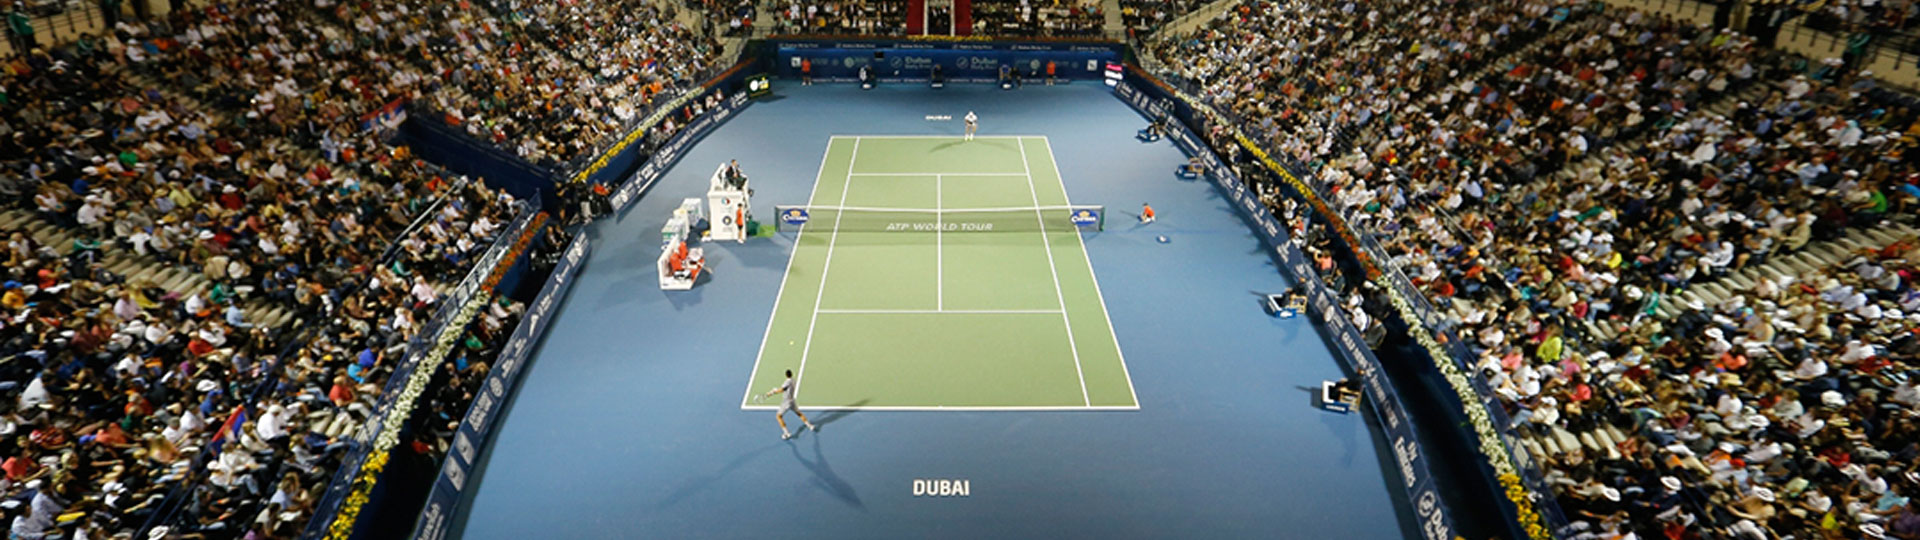 ATP and WTA Dubai Duty Free Tennis Championships - 2005